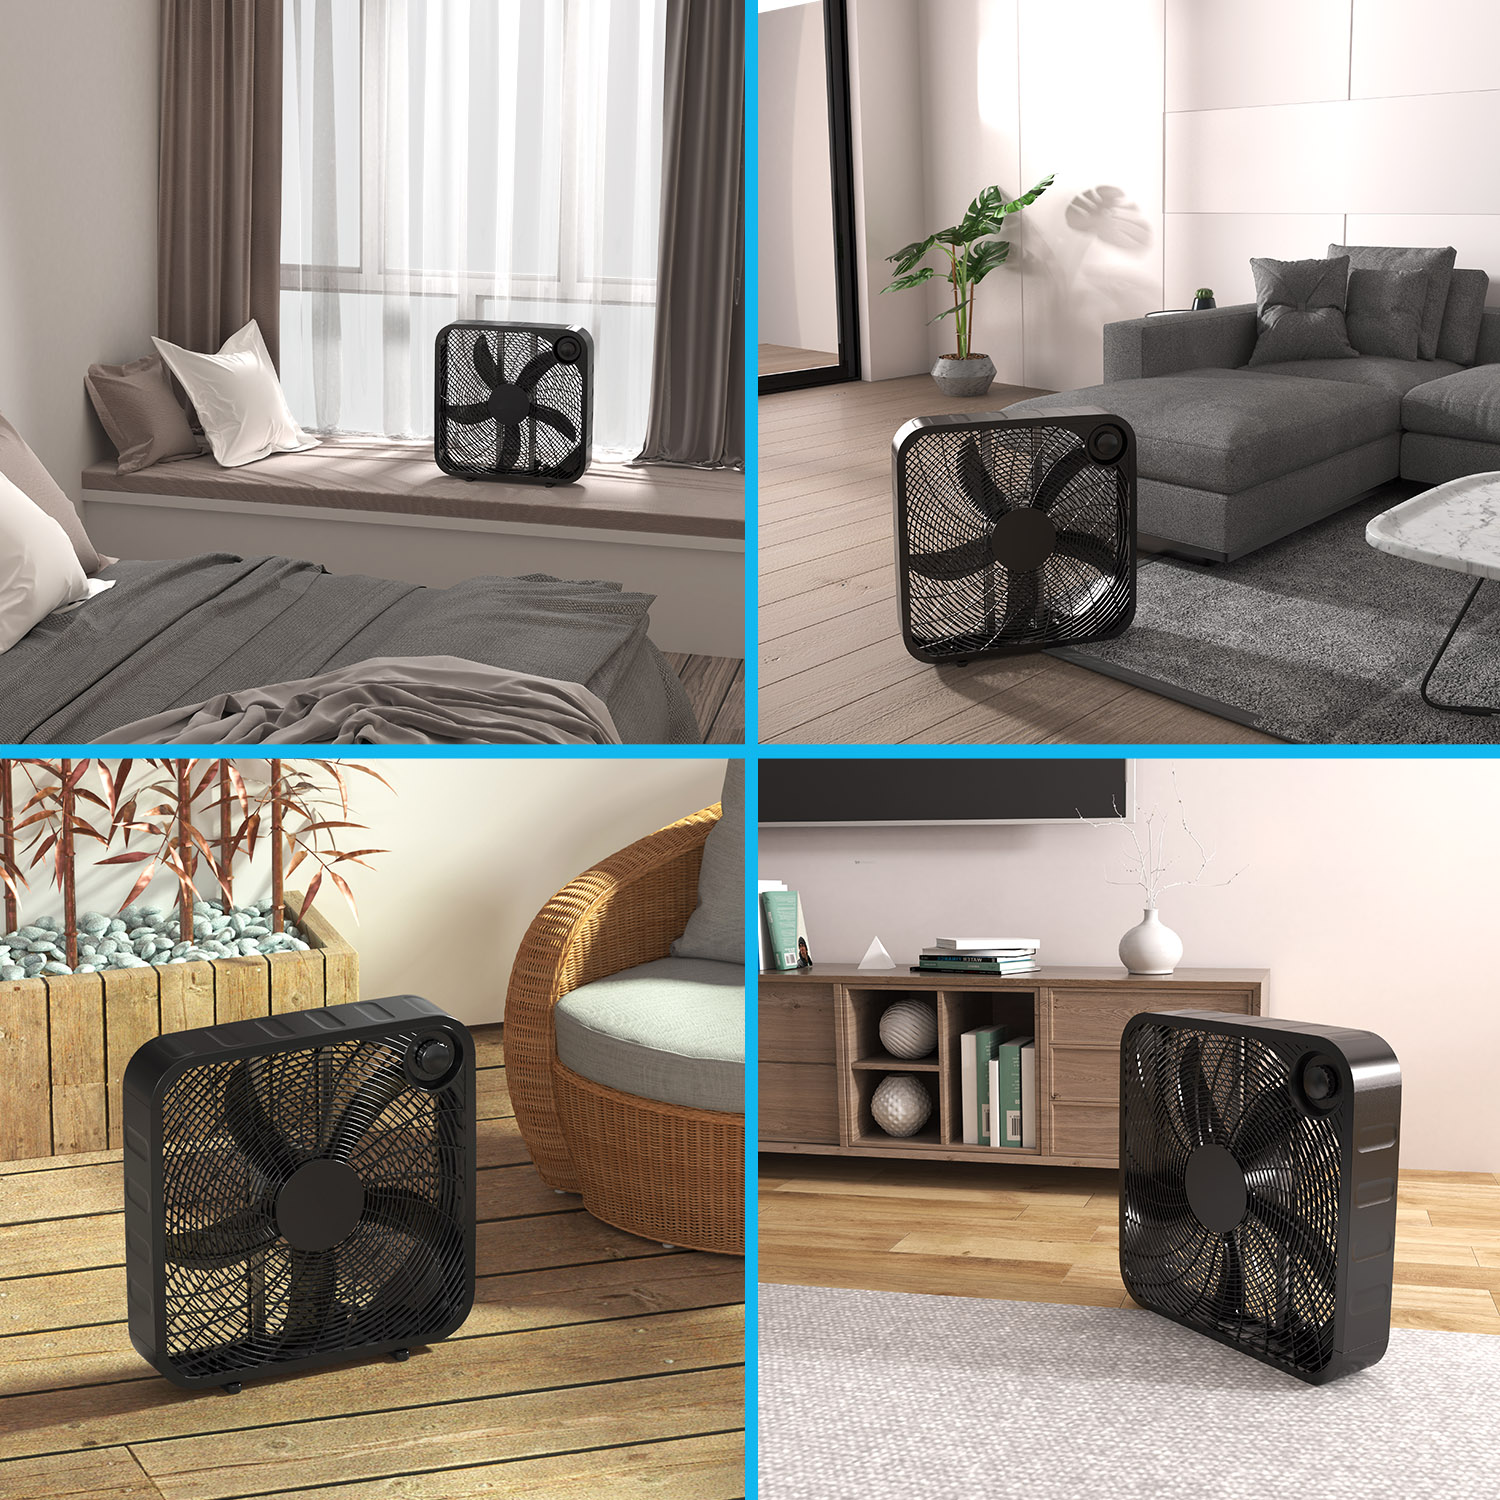 shinic Box Fan, 2 Speeds, 10 Inch Table Fan with Strong Airflow Coolin –  Genoz